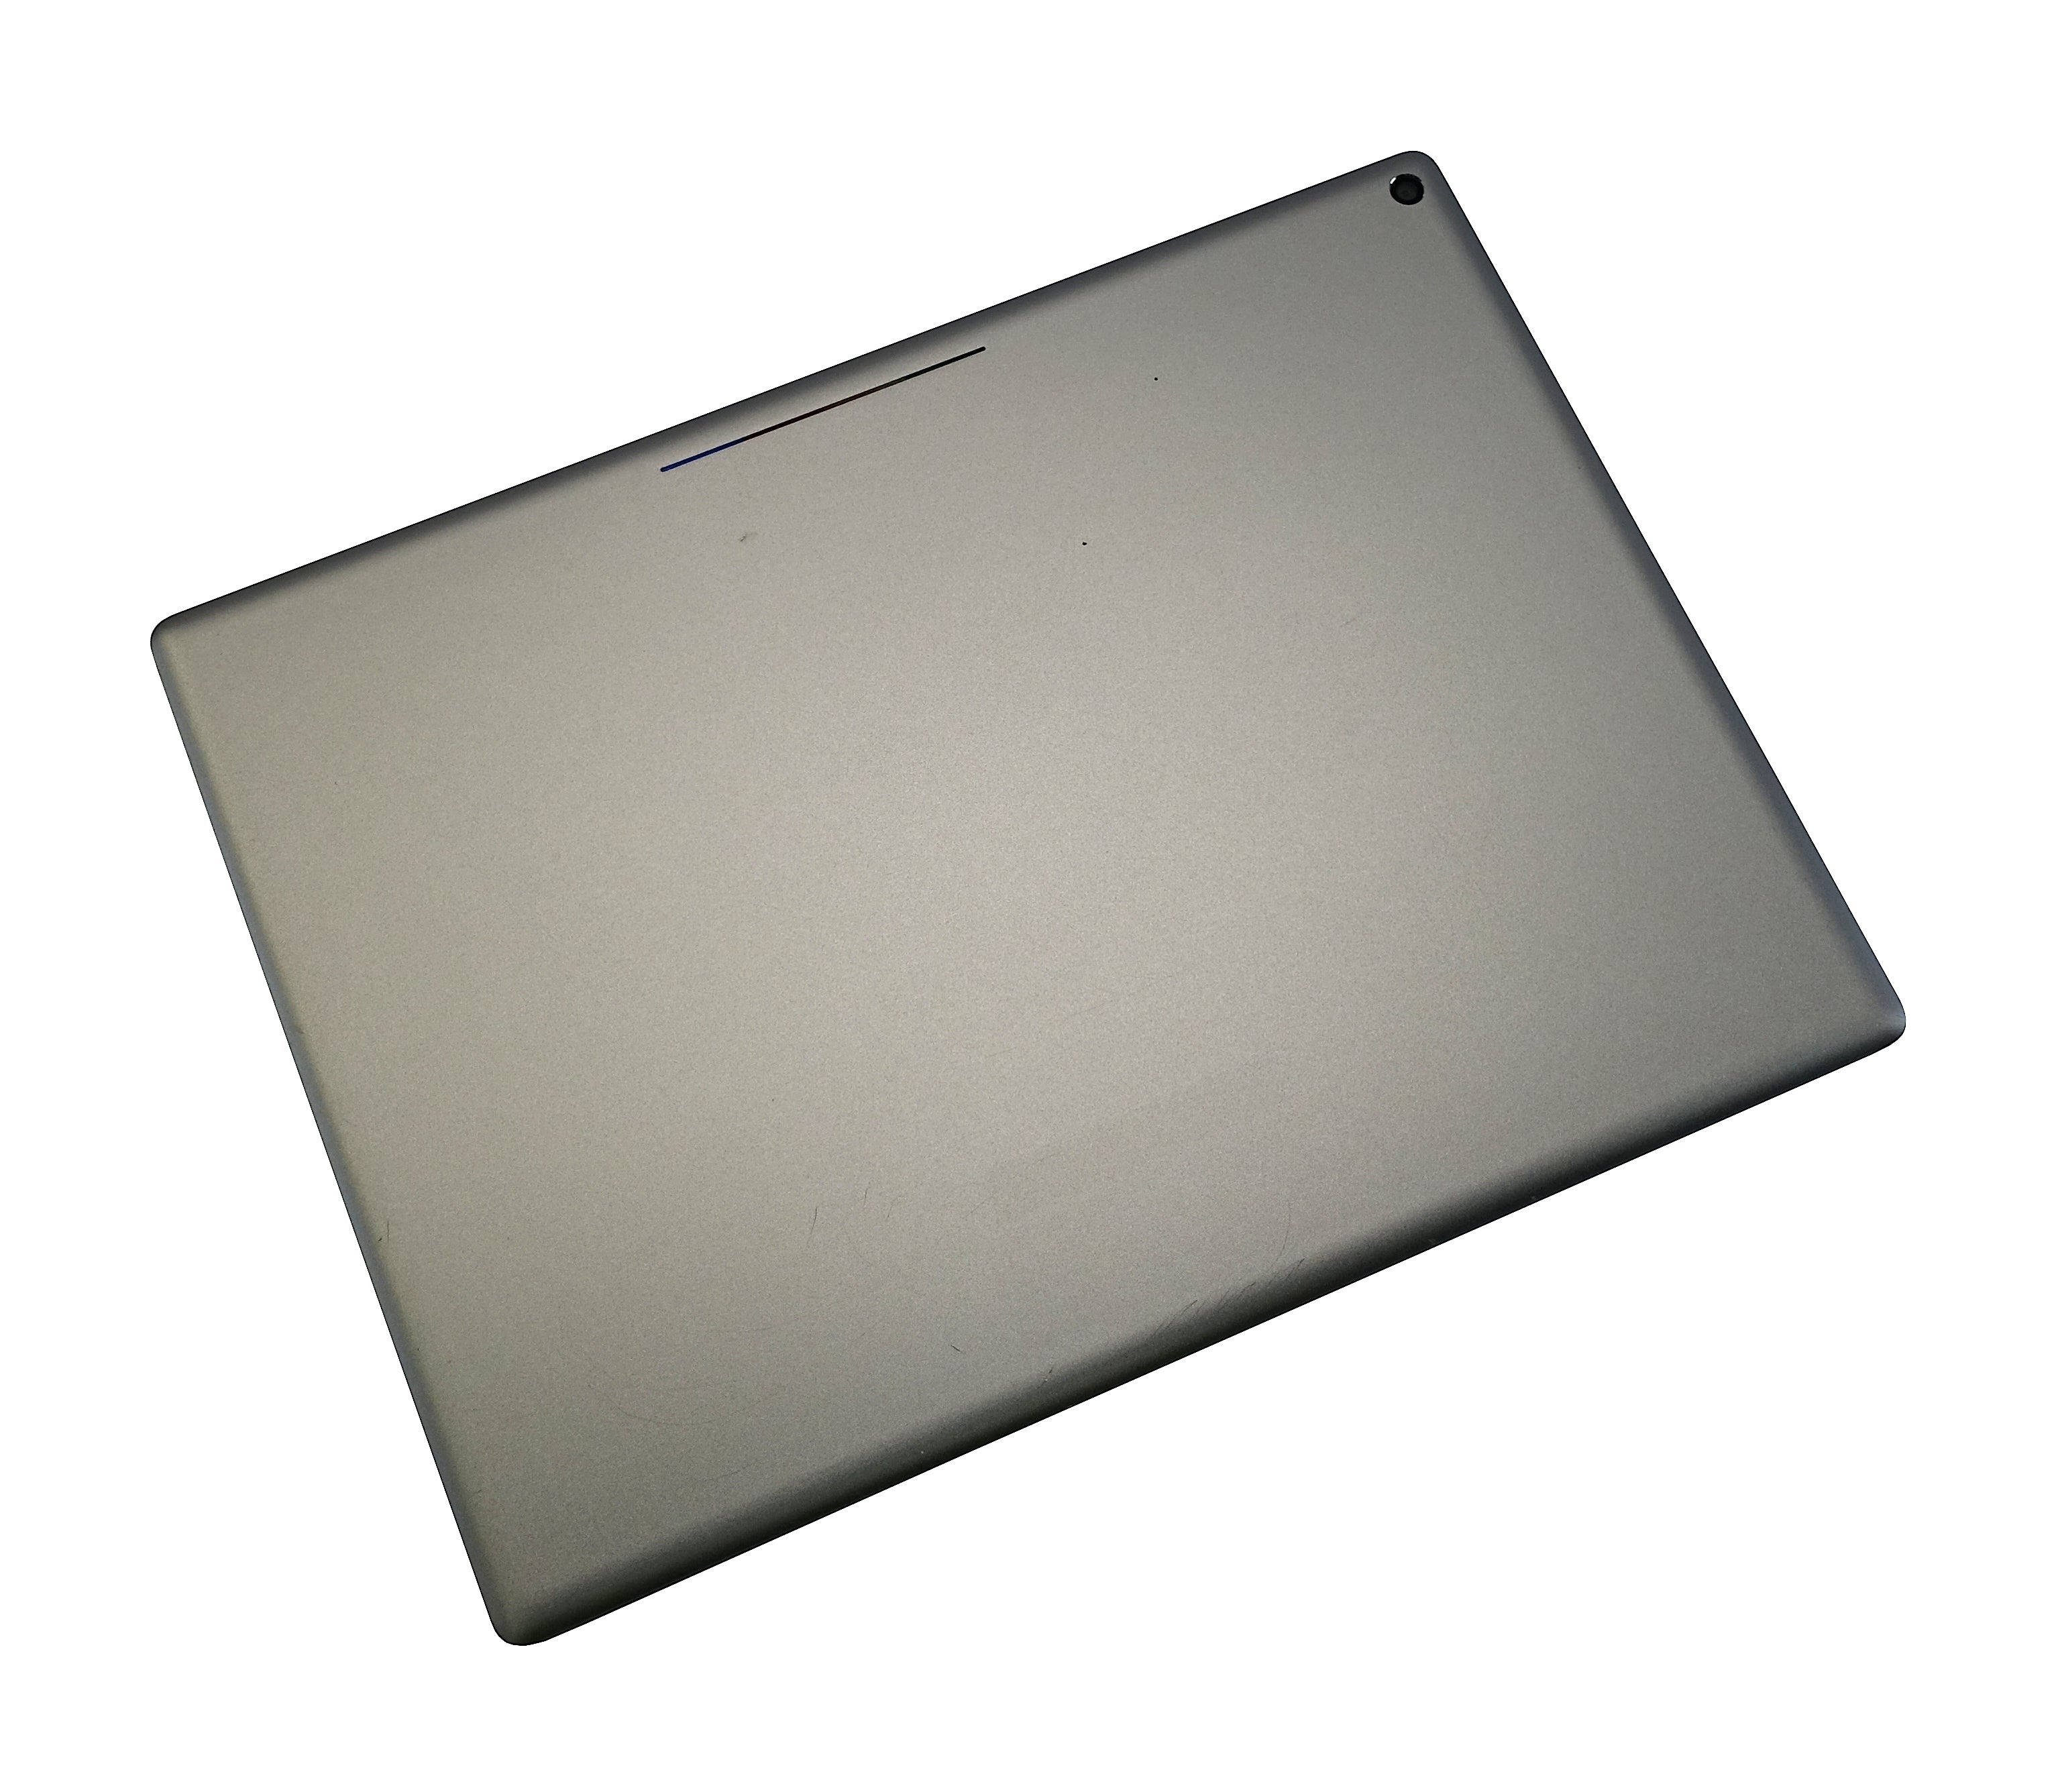 Google Pixel C 10.2" Tablet, 64GB, WiFi, Silver